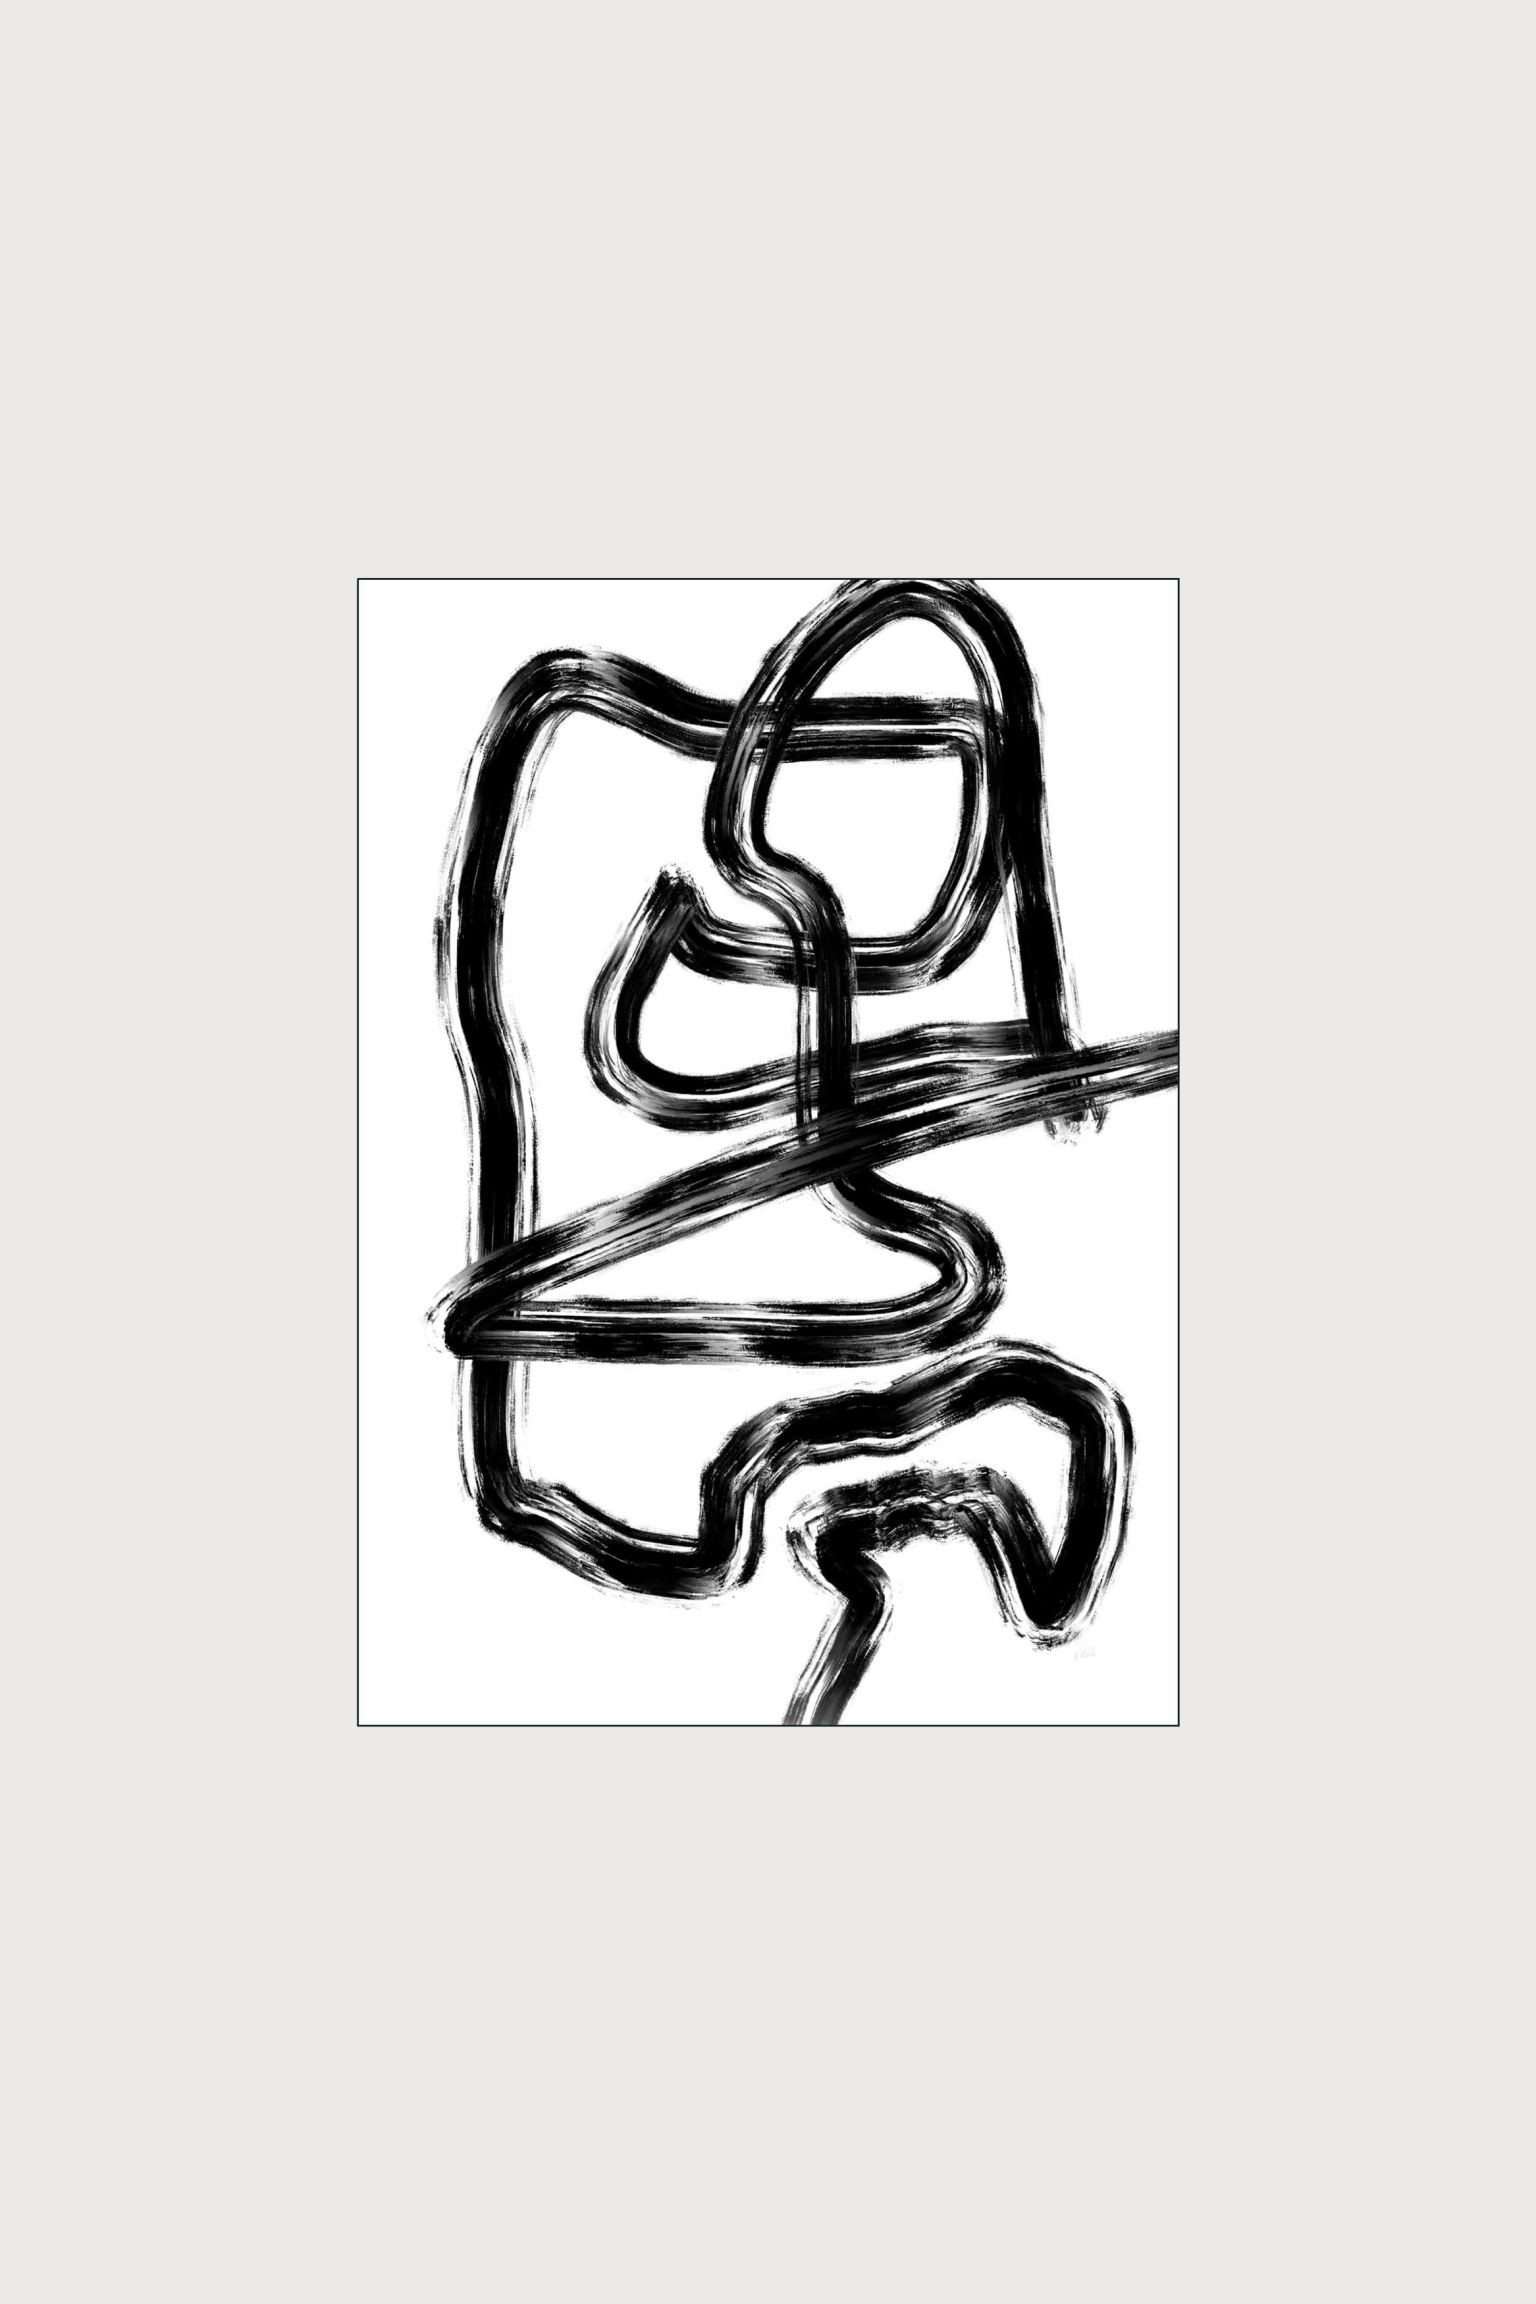 Poster & Frame N. Atelier - Path Ii - Черный/абстрактное искусство 1204418001 | 1204418001